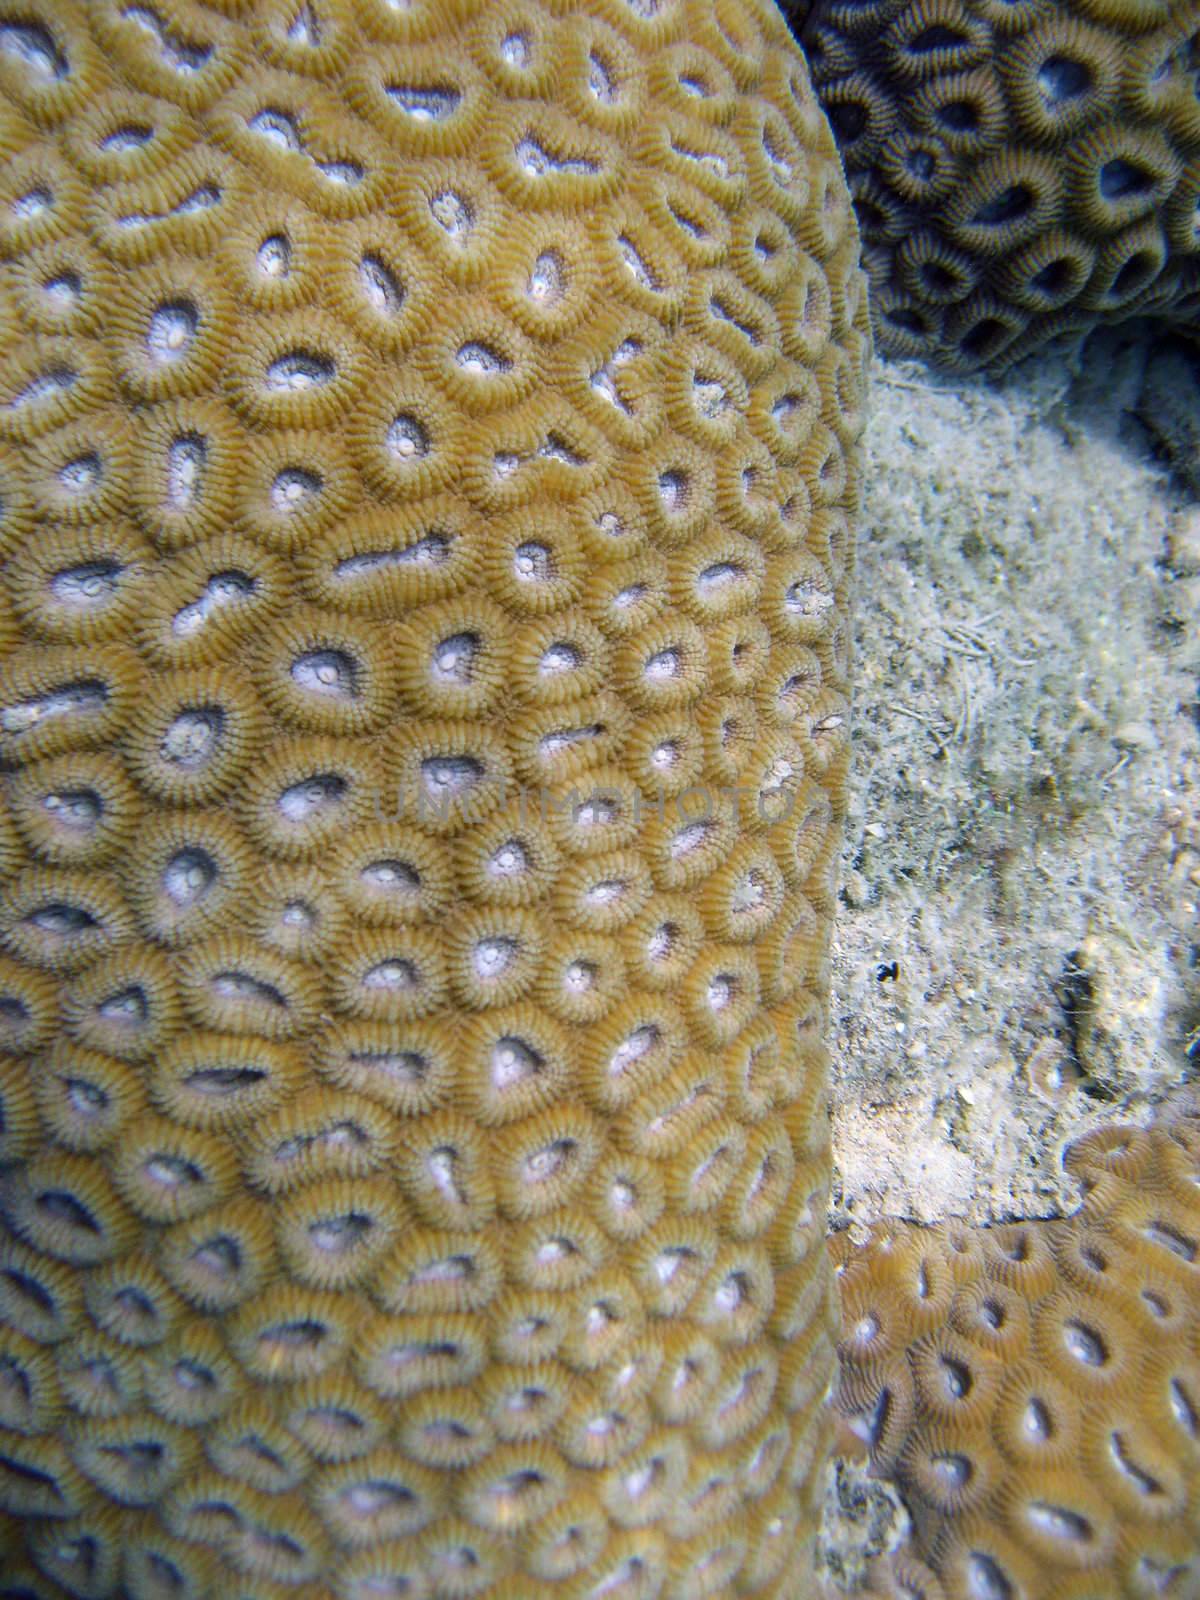 Underwater Life of Great Barrier Reef, Australia